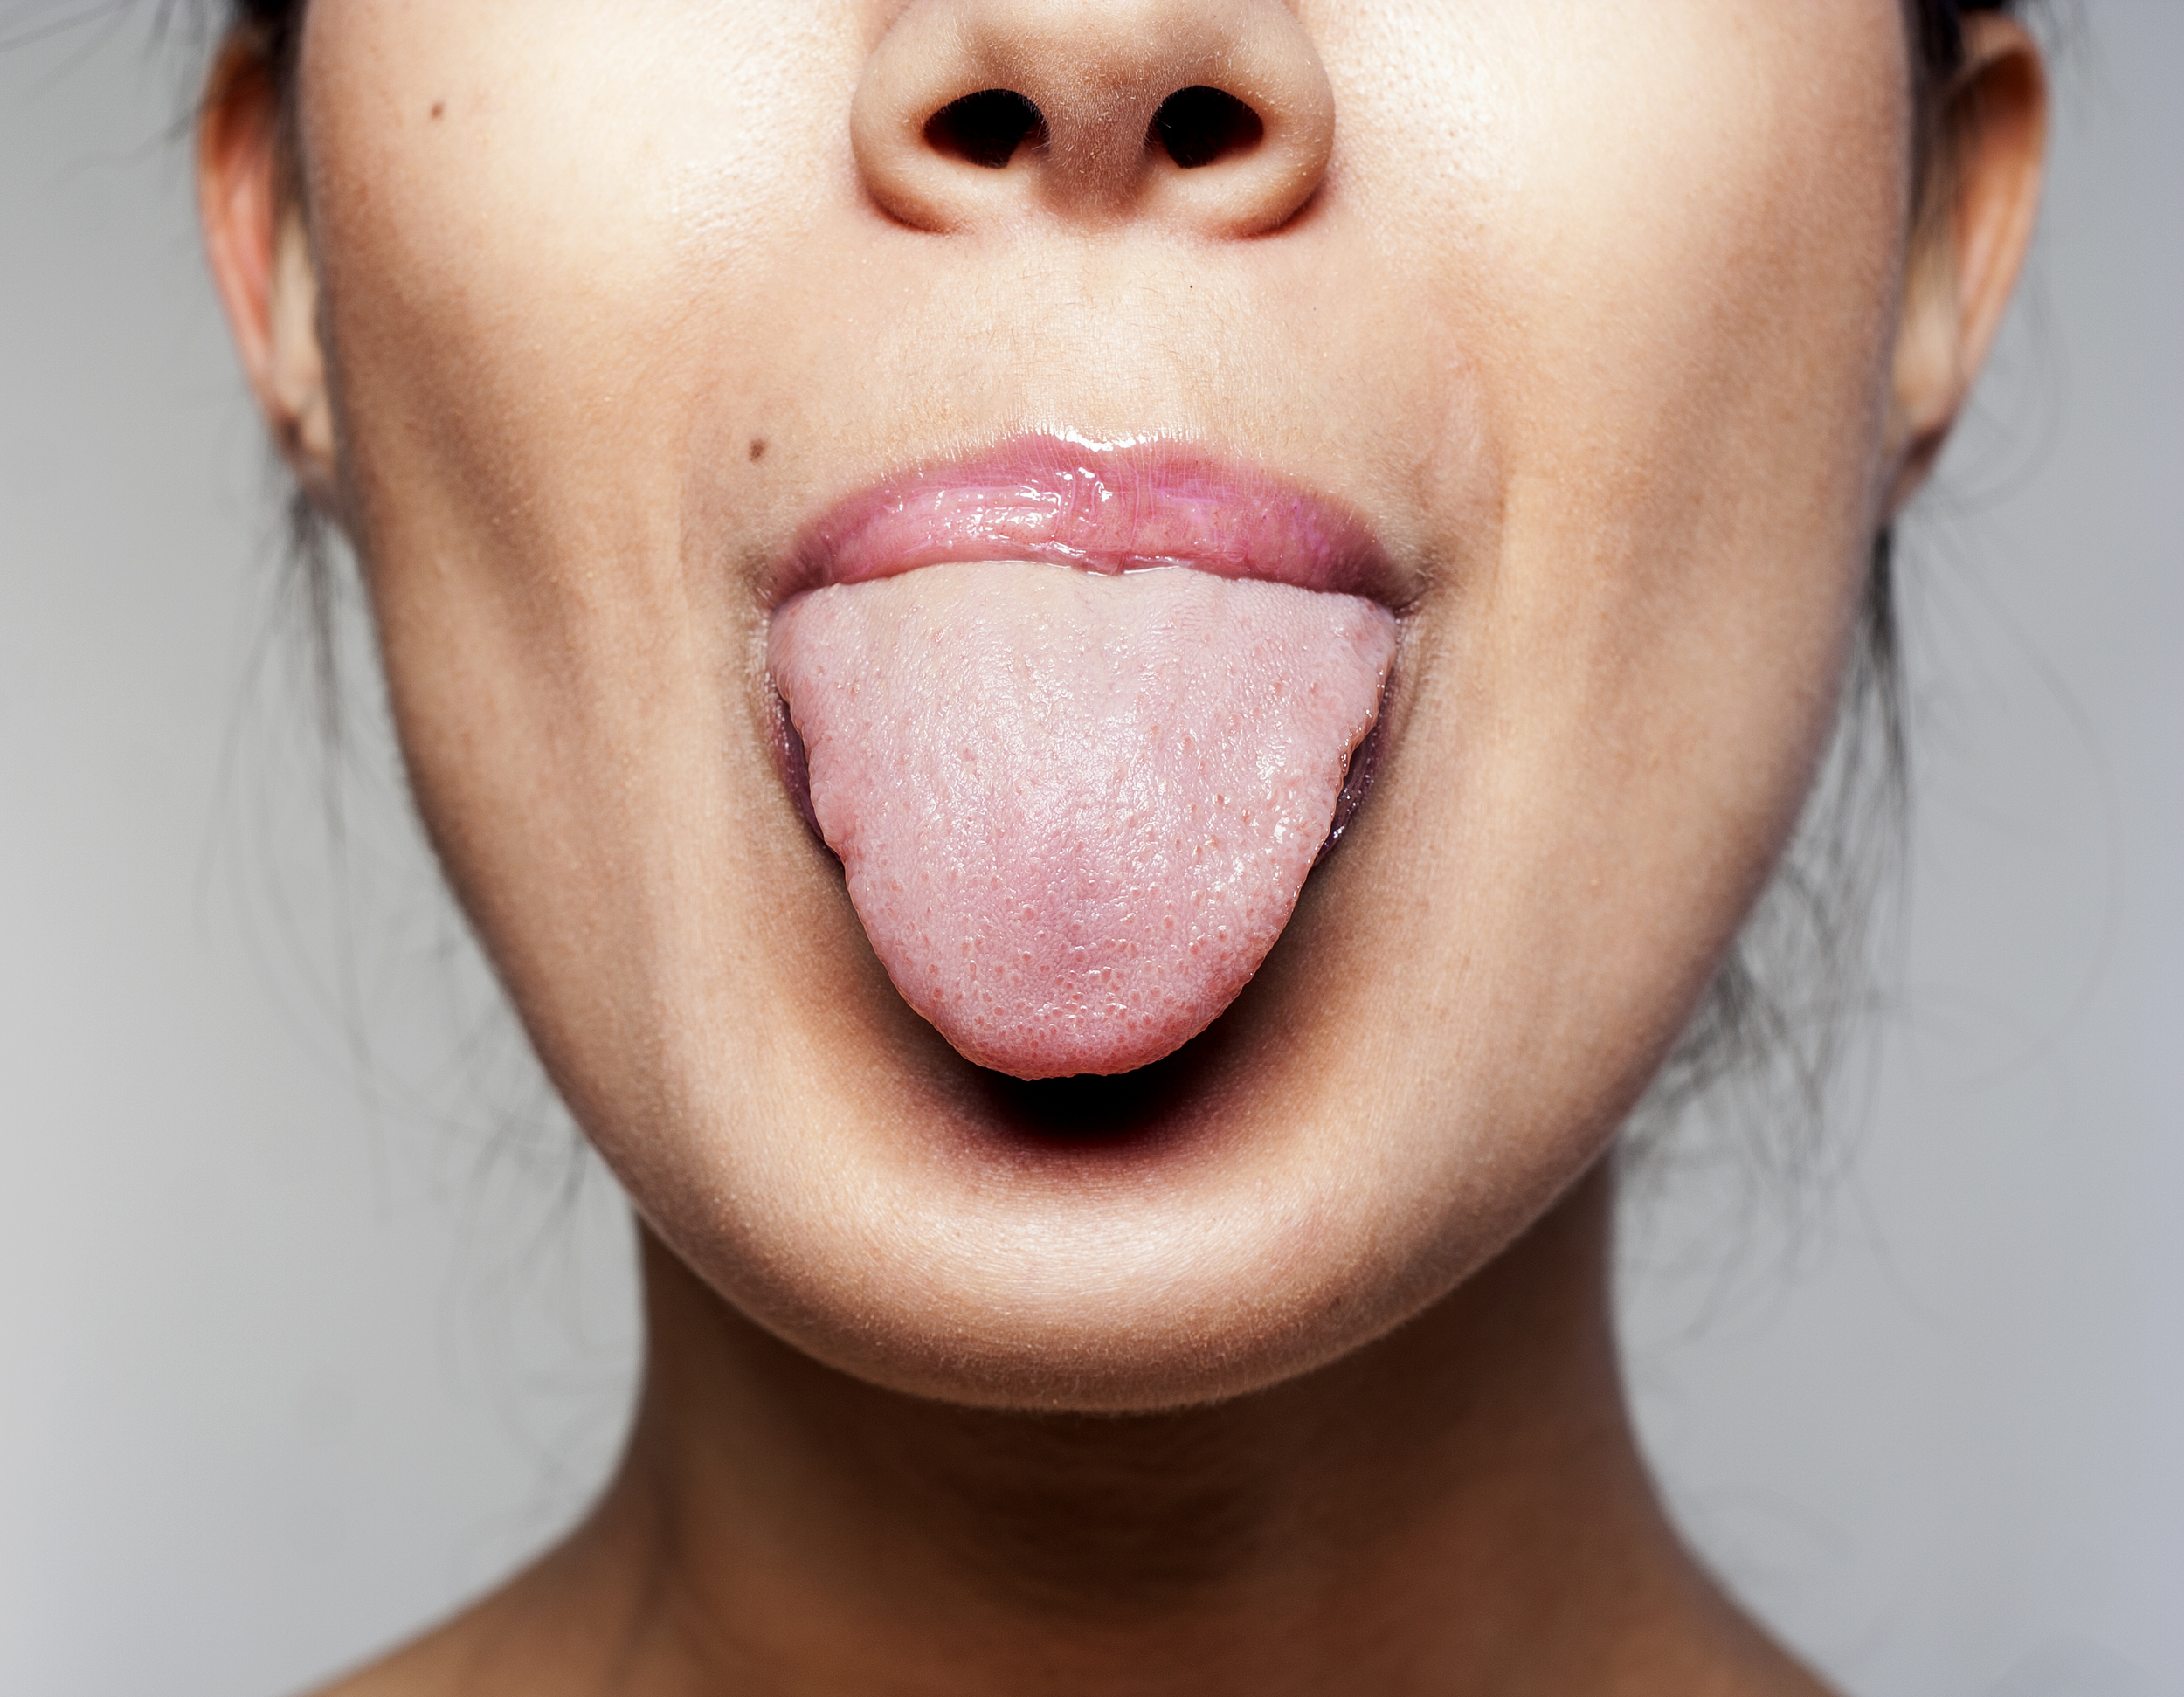 Woman Tongue Out